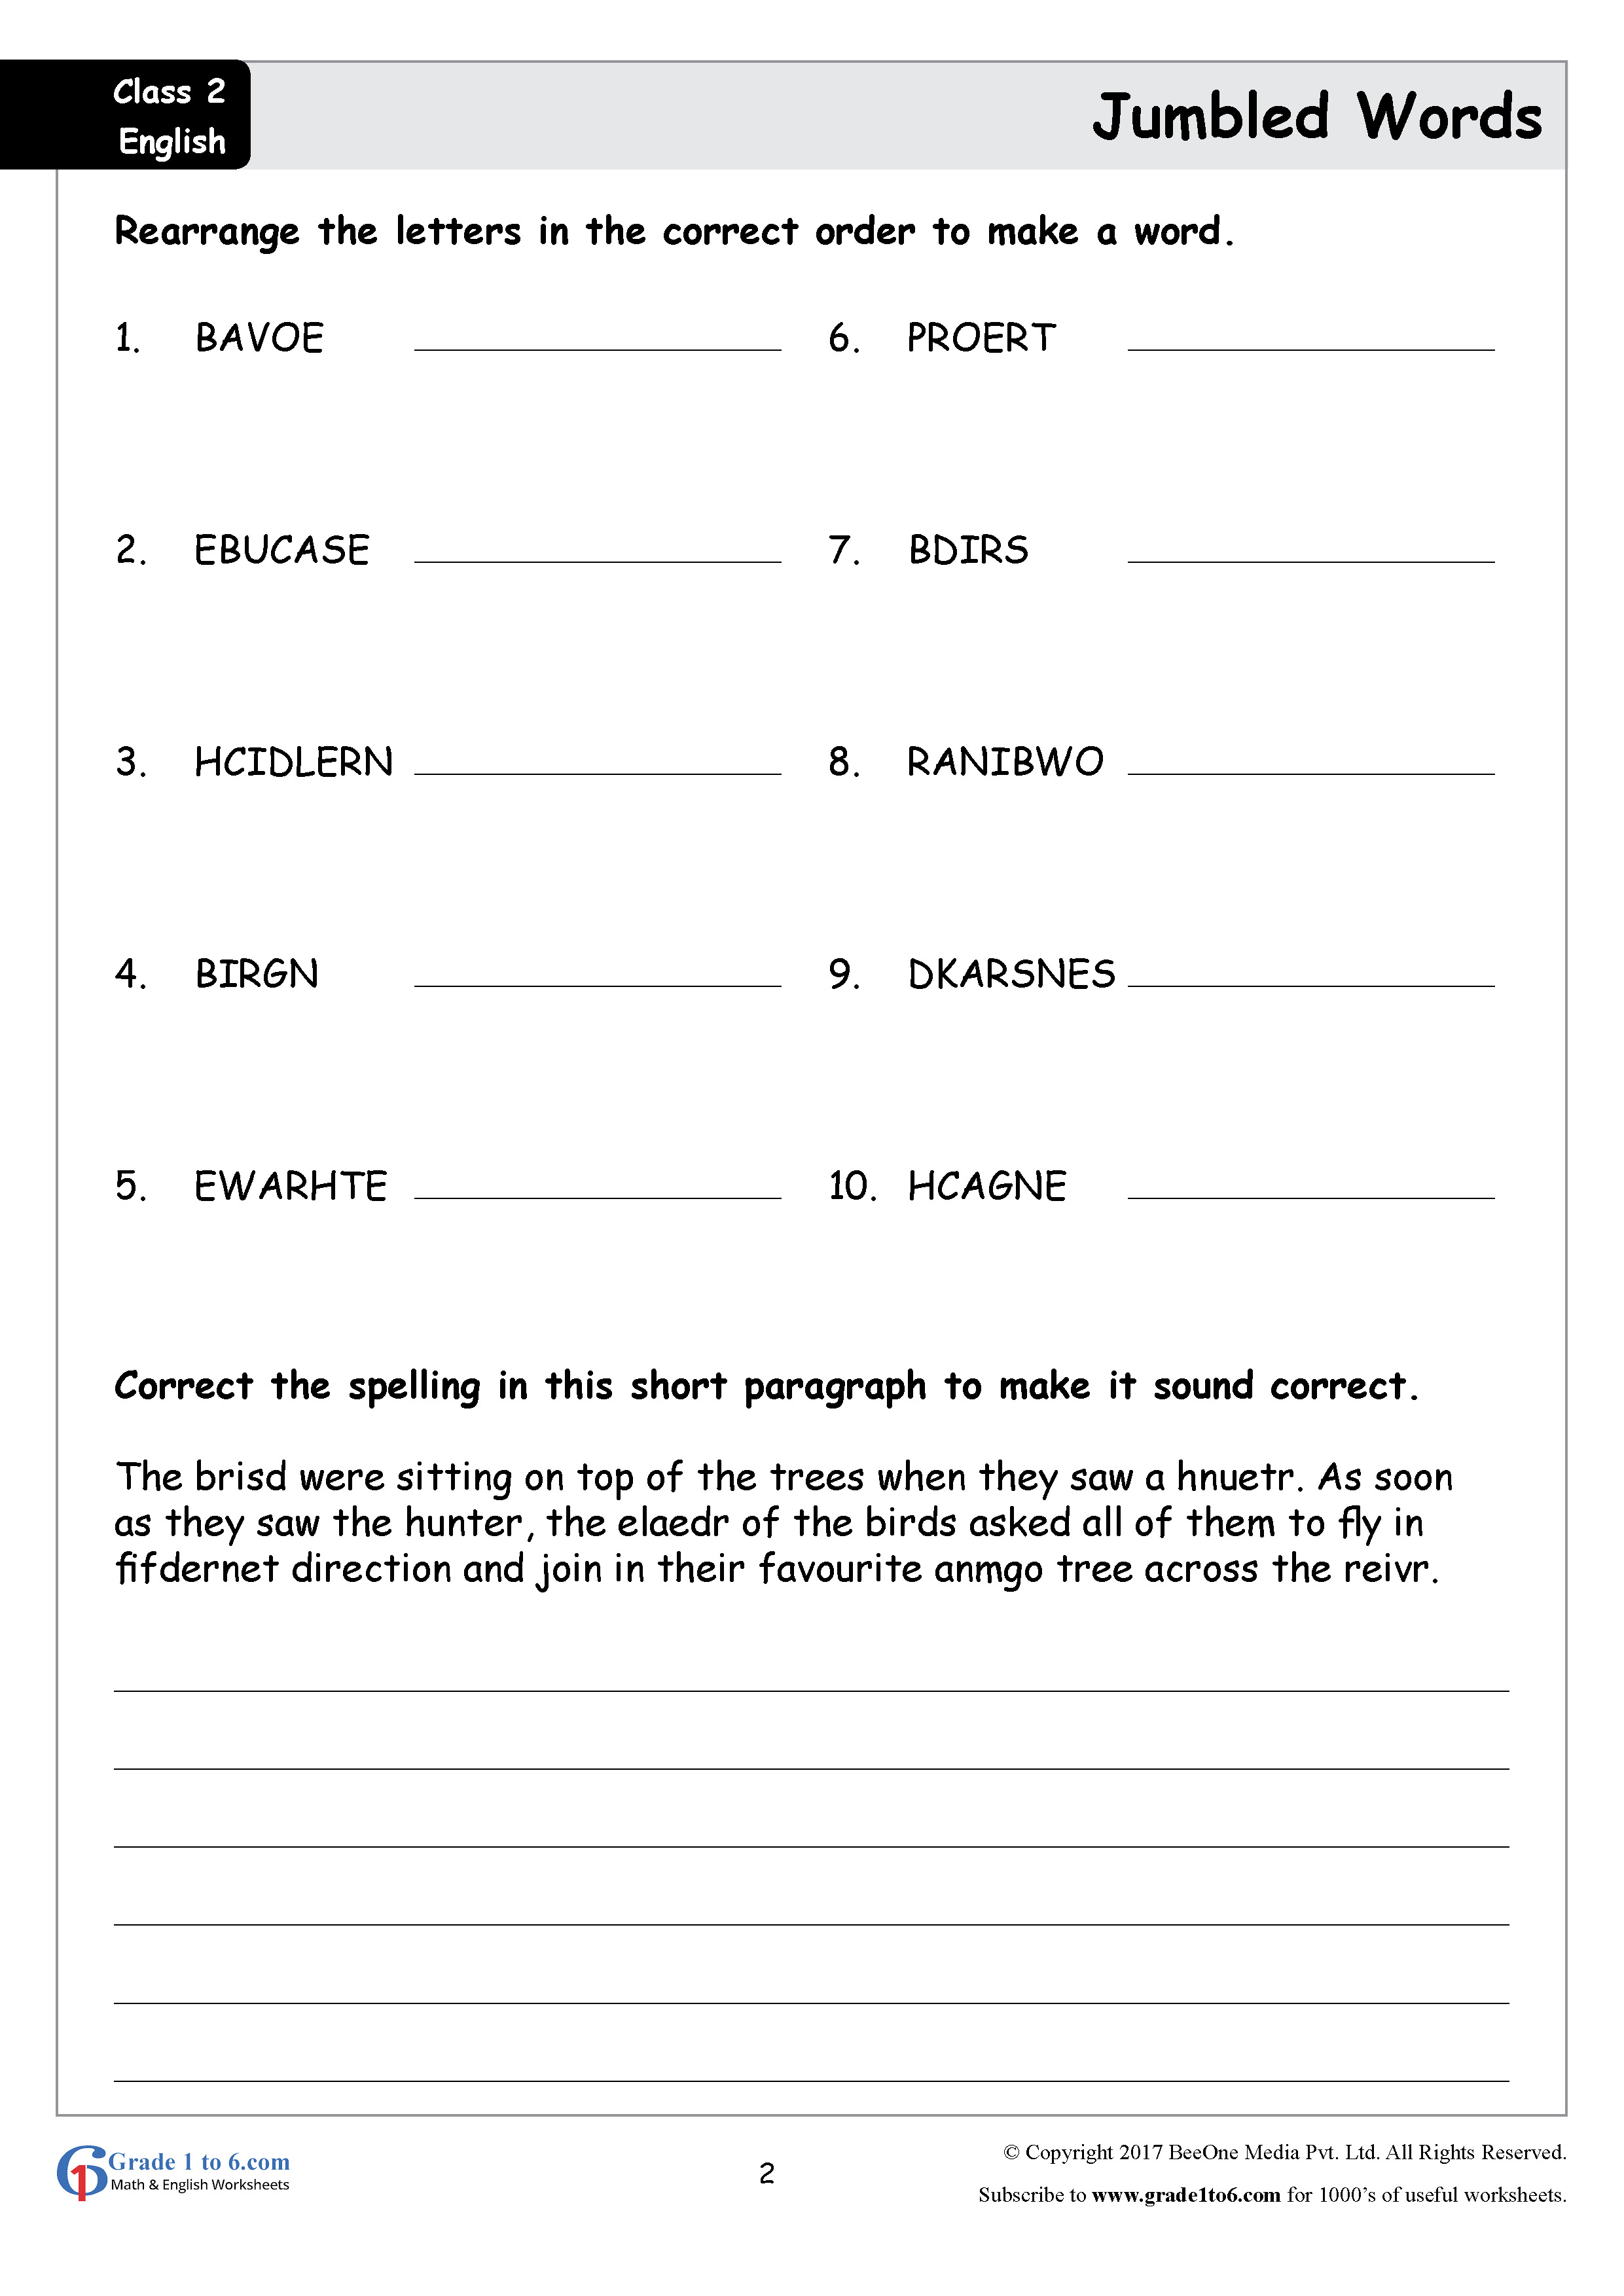 jumbled-words-english-worksheet-class-2-www-grade1to6